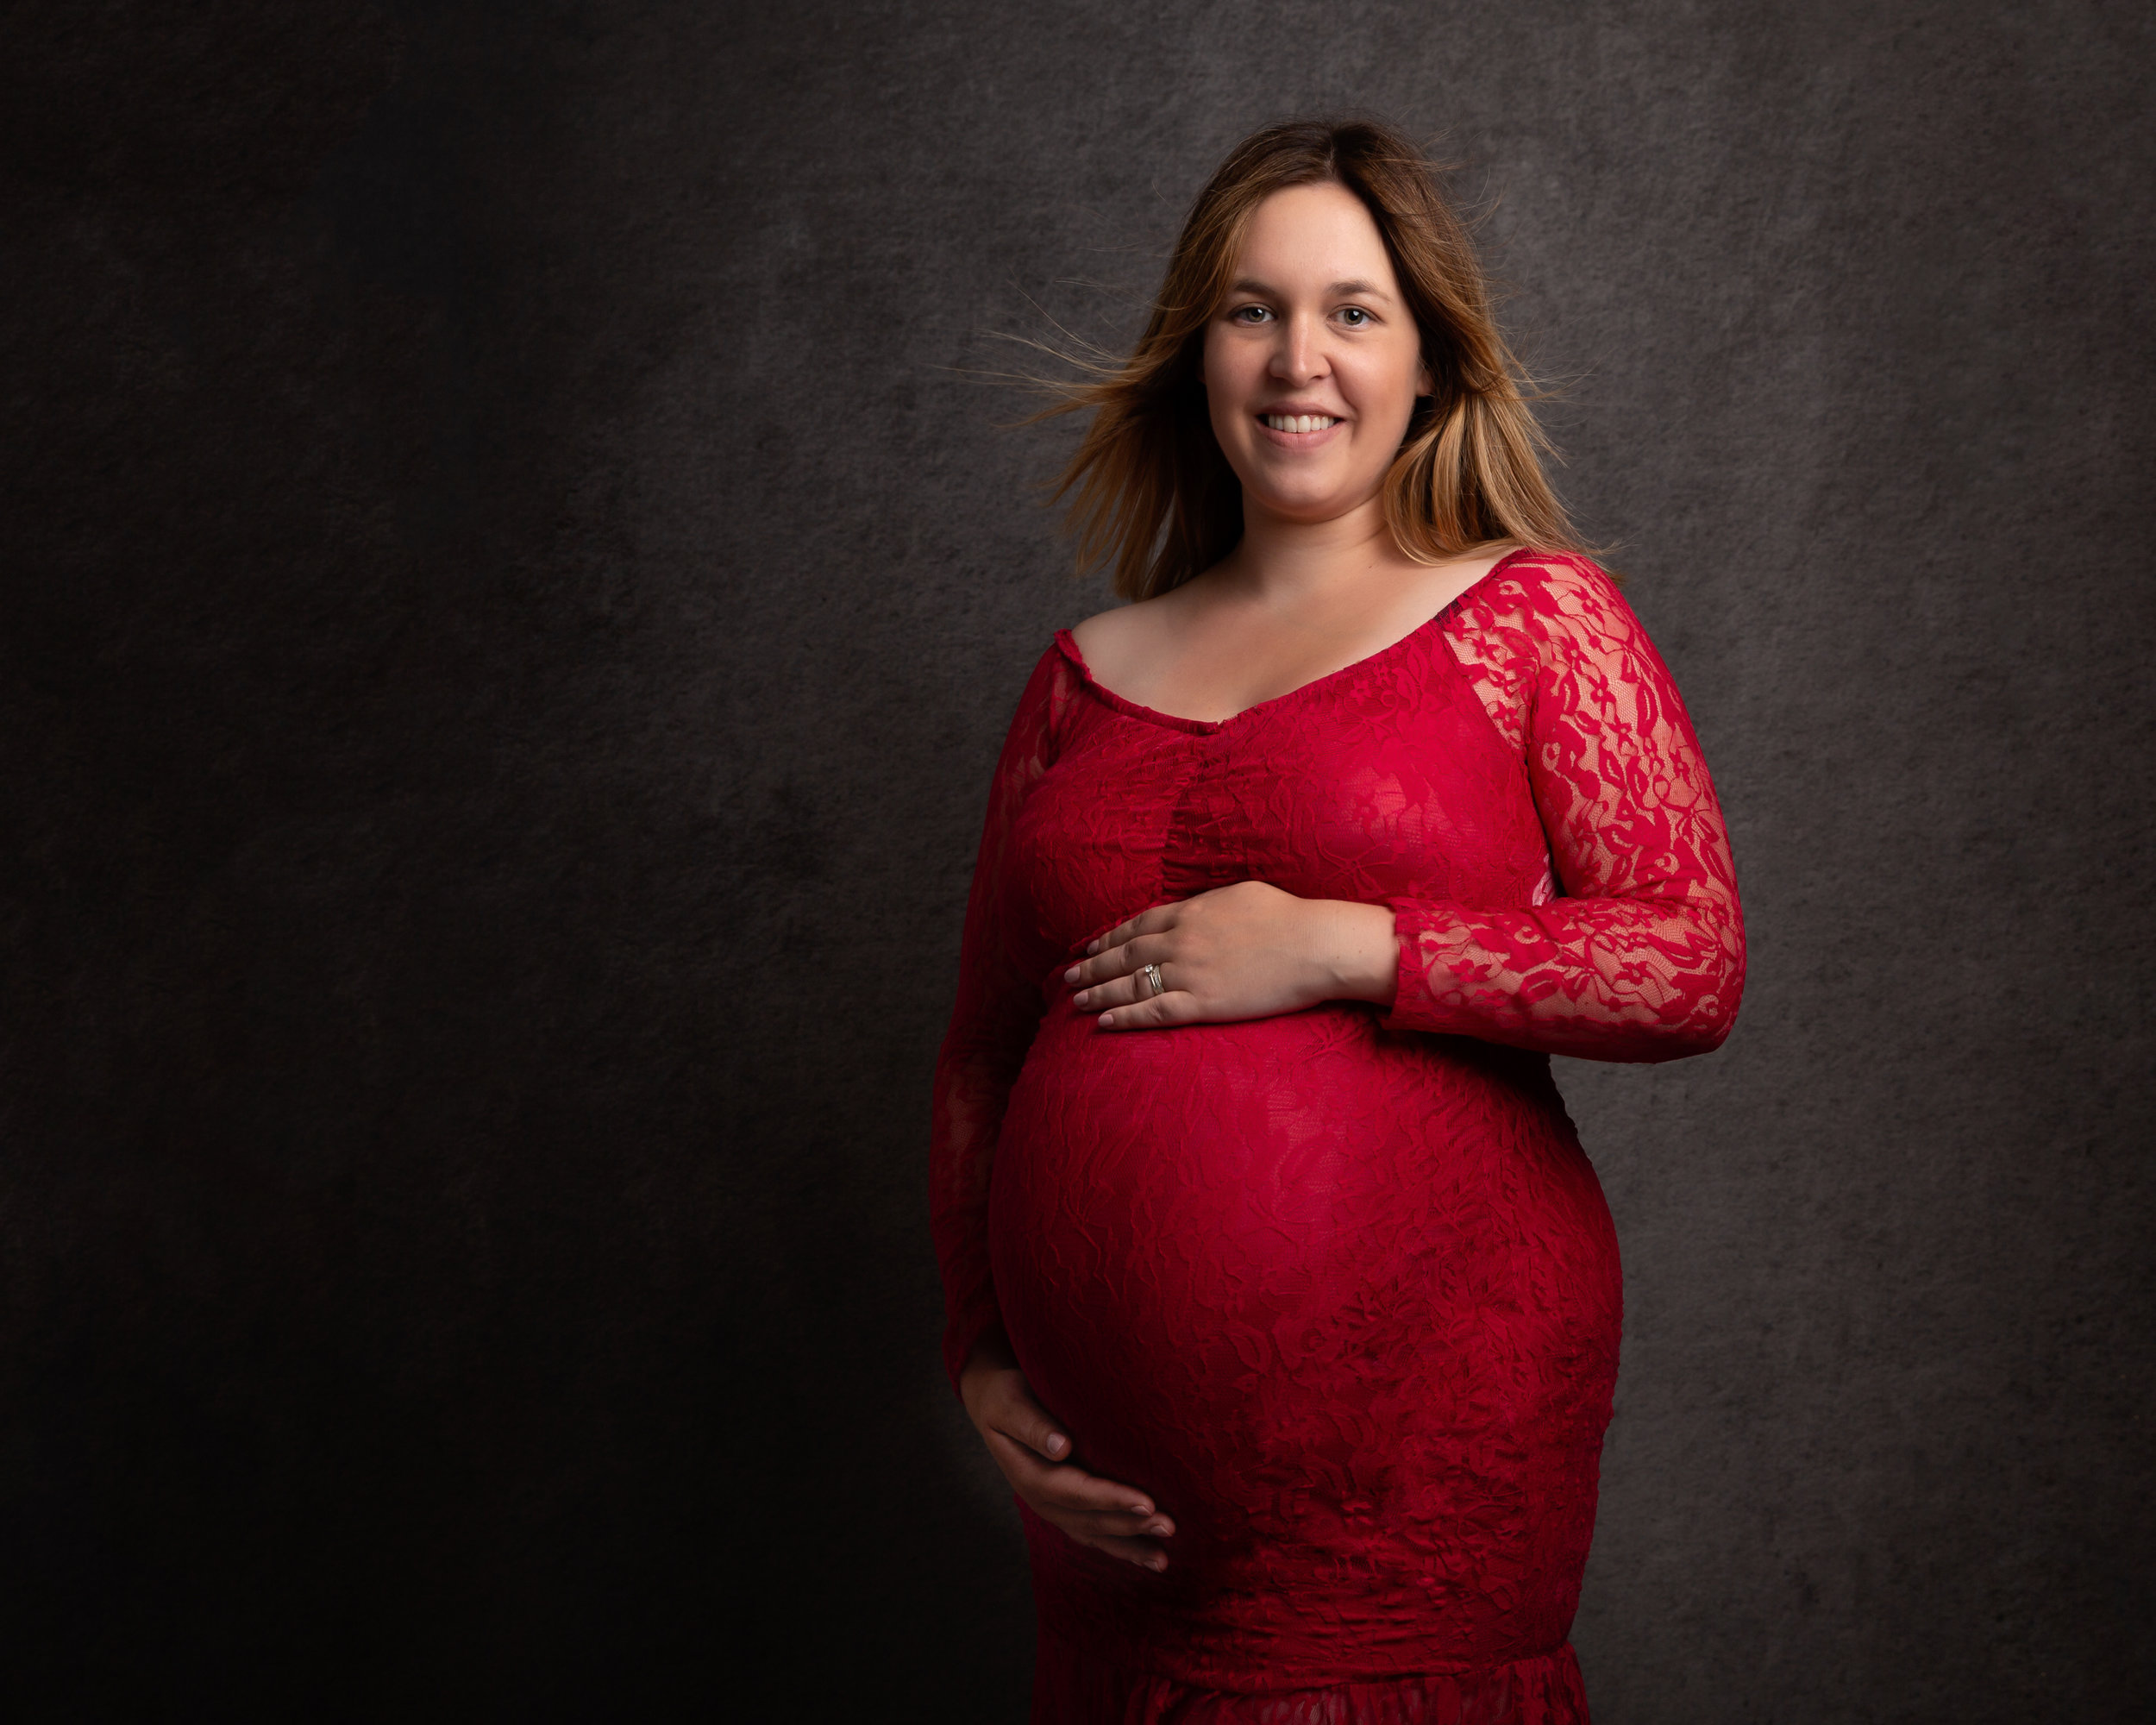 award-winning-maternity-portrait-red-dress-london-photographer.jpg (Copy)